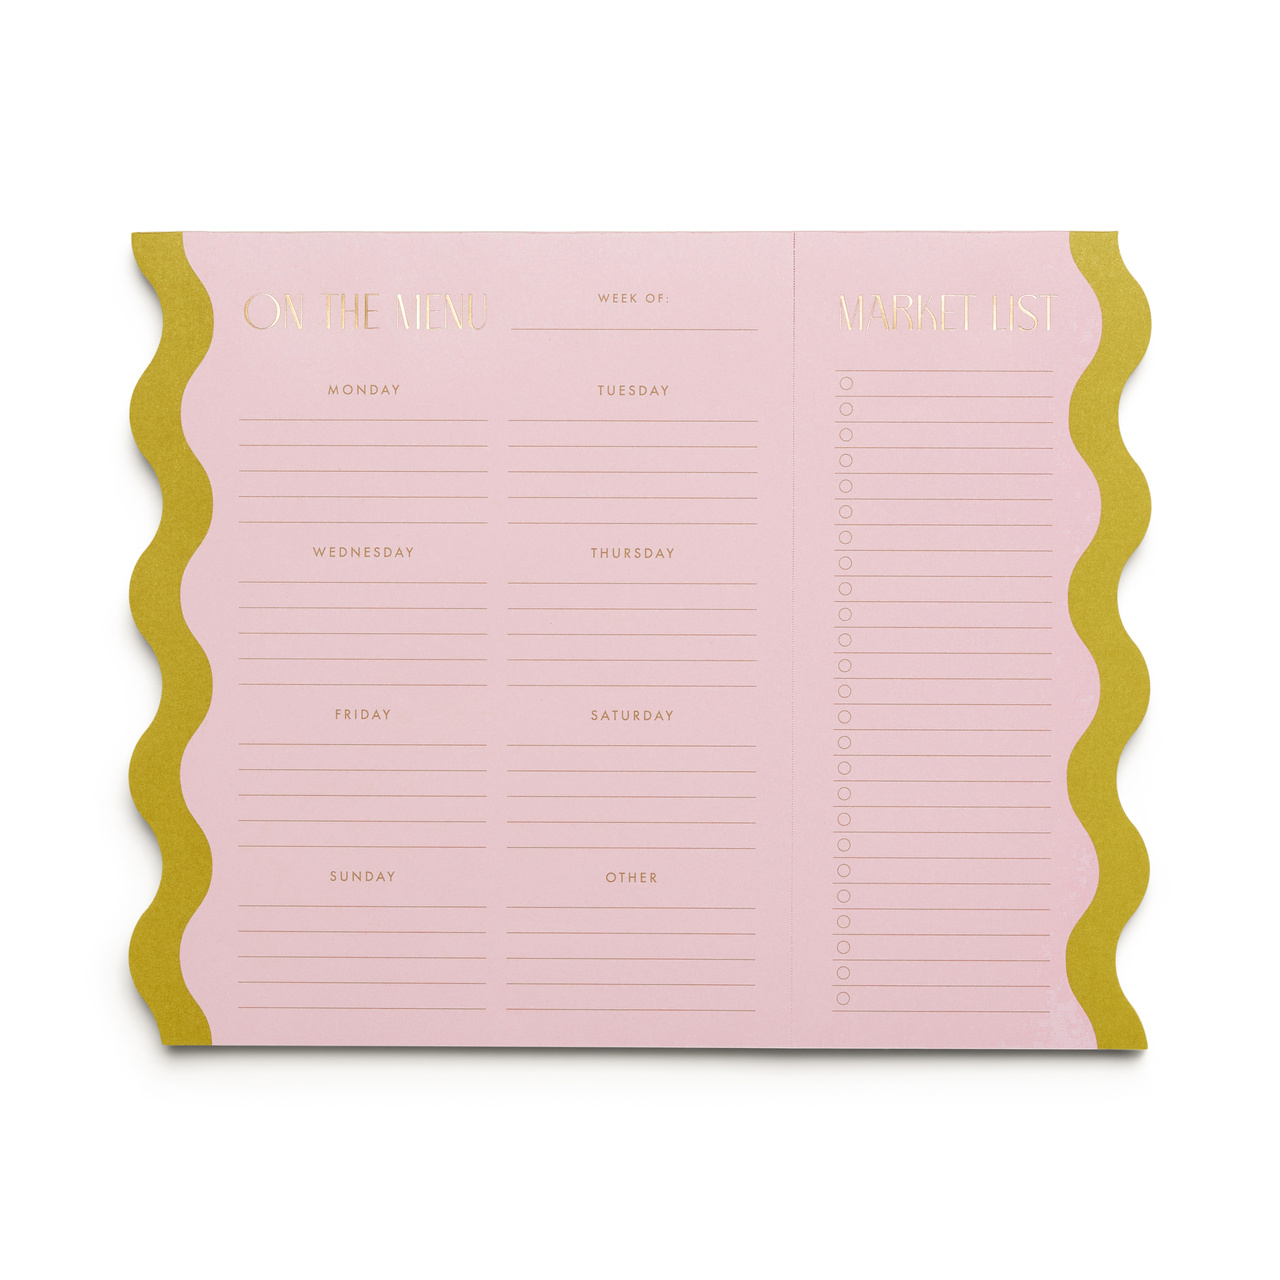 Planning calendar Menu - Pink & Chartreuse